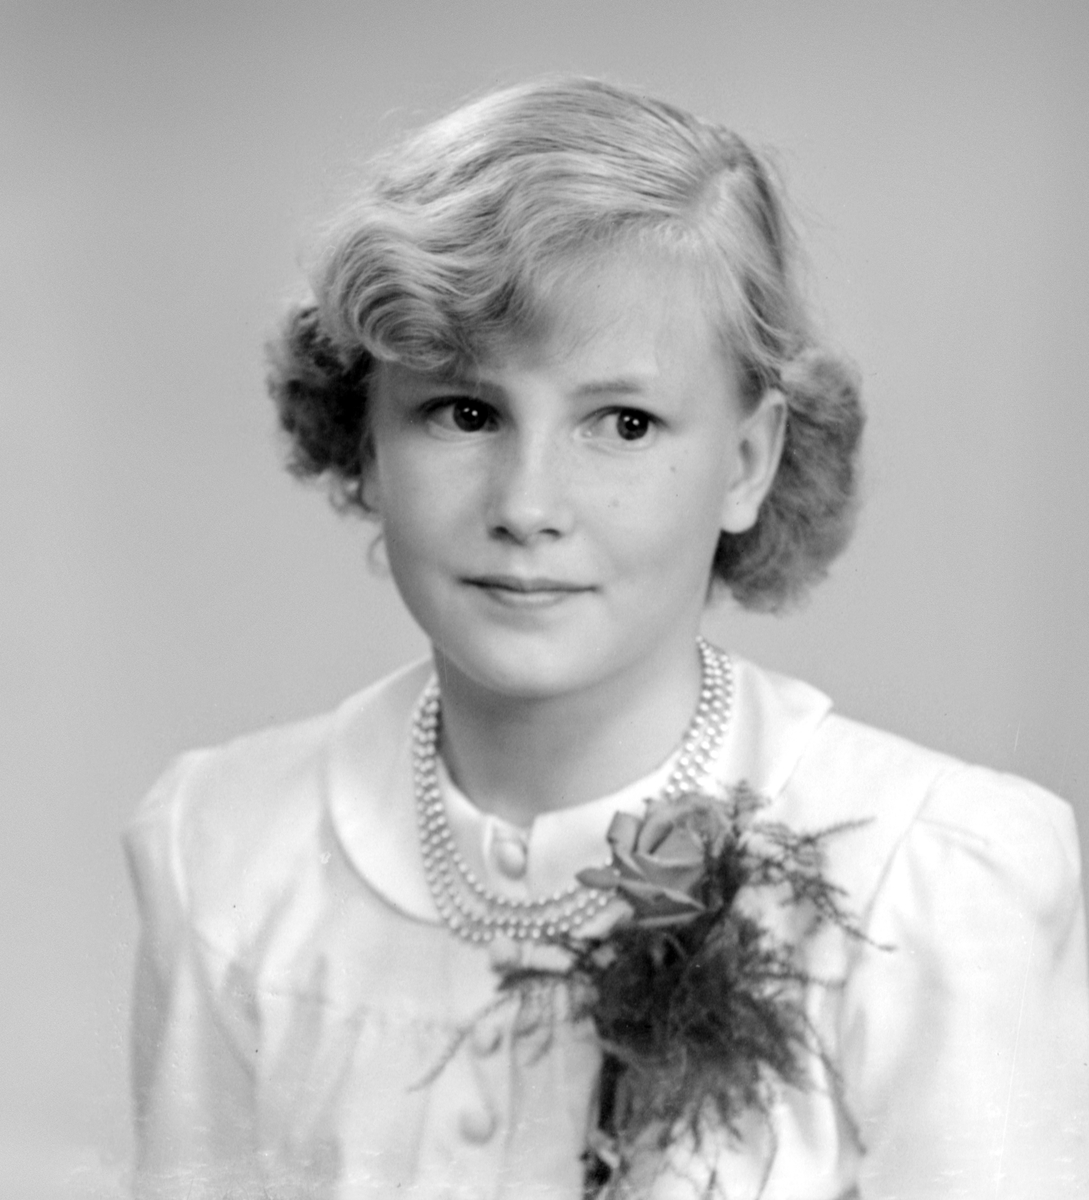 Konfirmanden Ingrid Håkansson (?). Foto i maj 1950.
